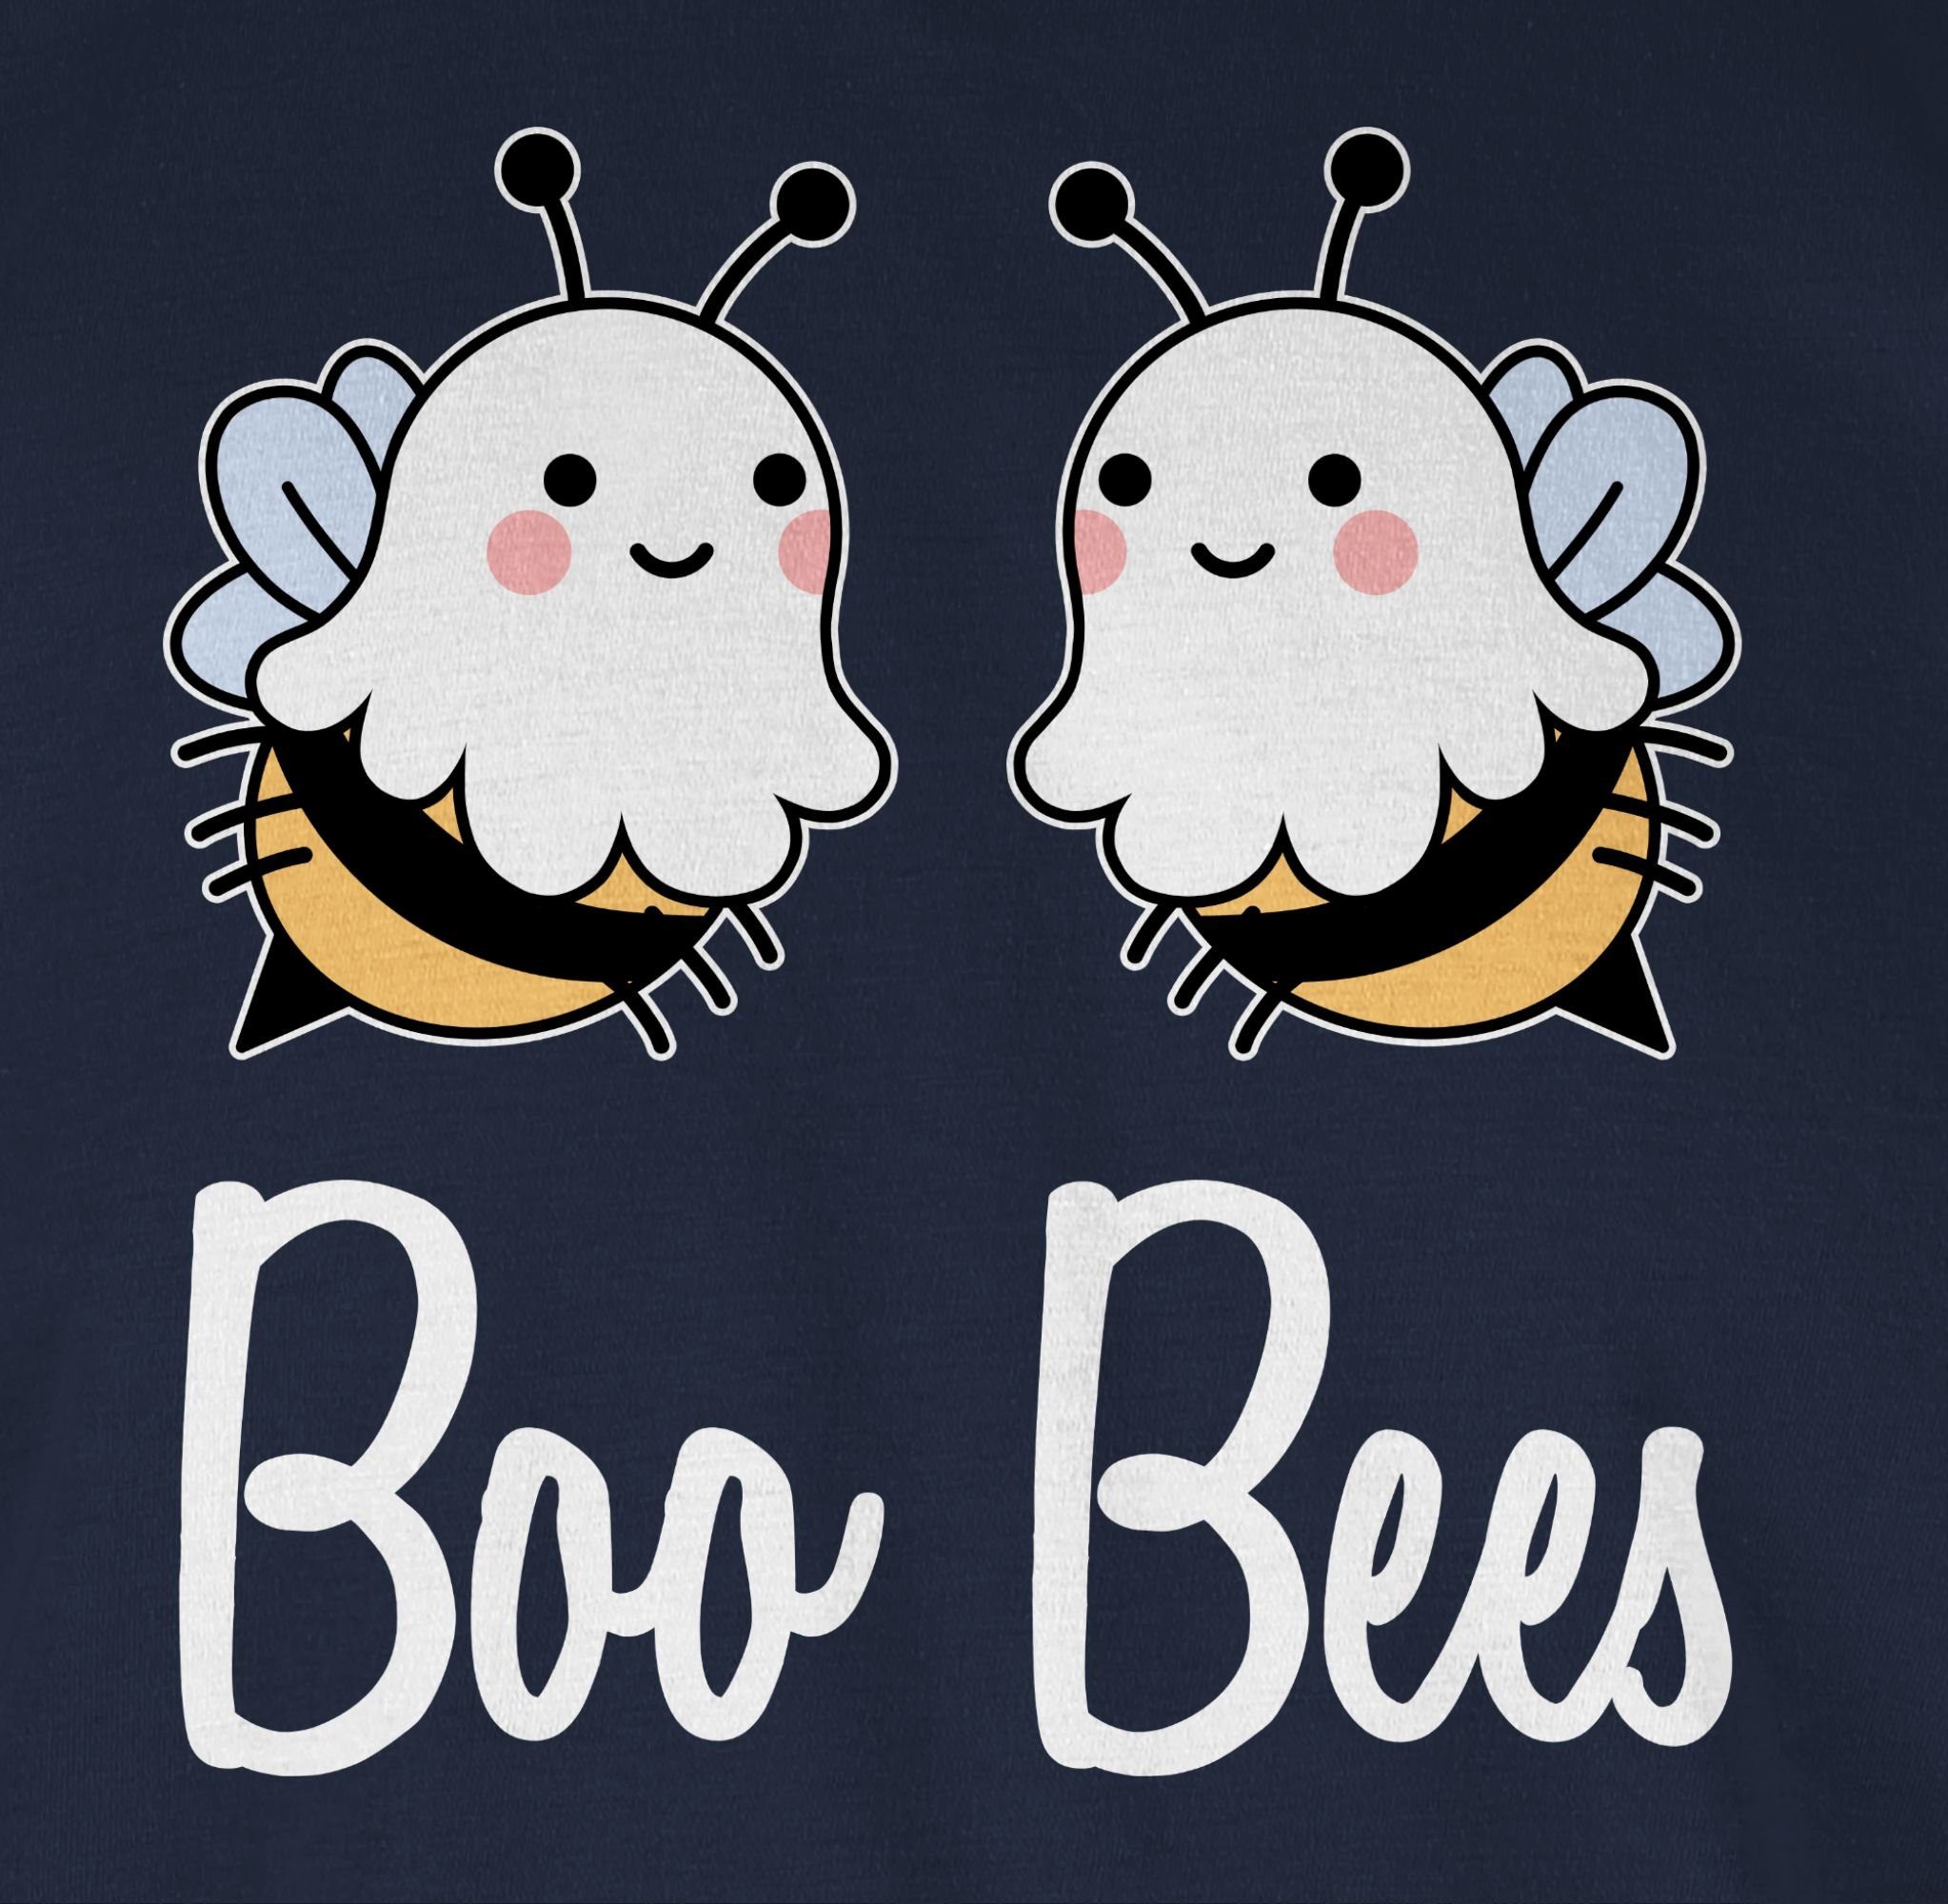 Shirtracer T-Shirt Boo Bees 2 Boobs Herren Kostüme Halloween Blau Navy